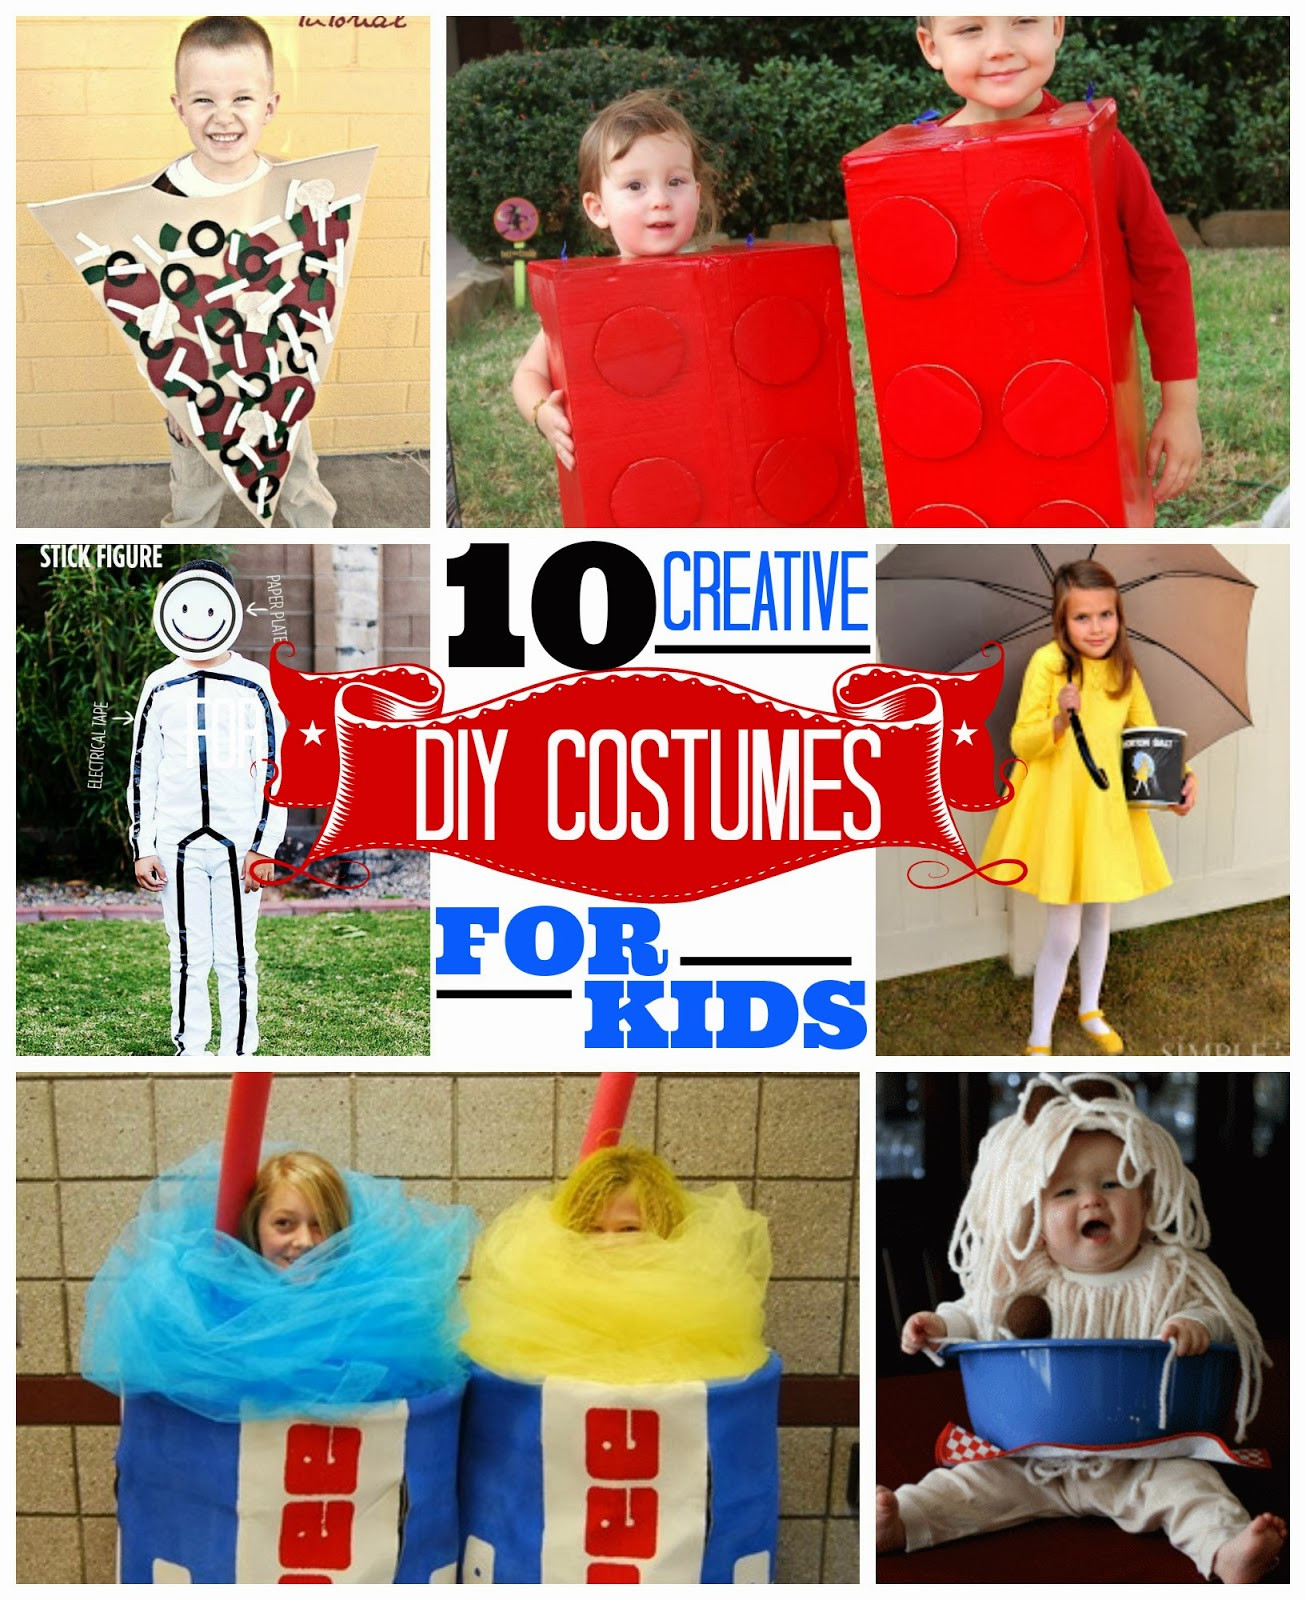 DIY Costume Ideas For Kids
 EAT SLEEP MAKE 10 Creative DIY Costumes for Kids